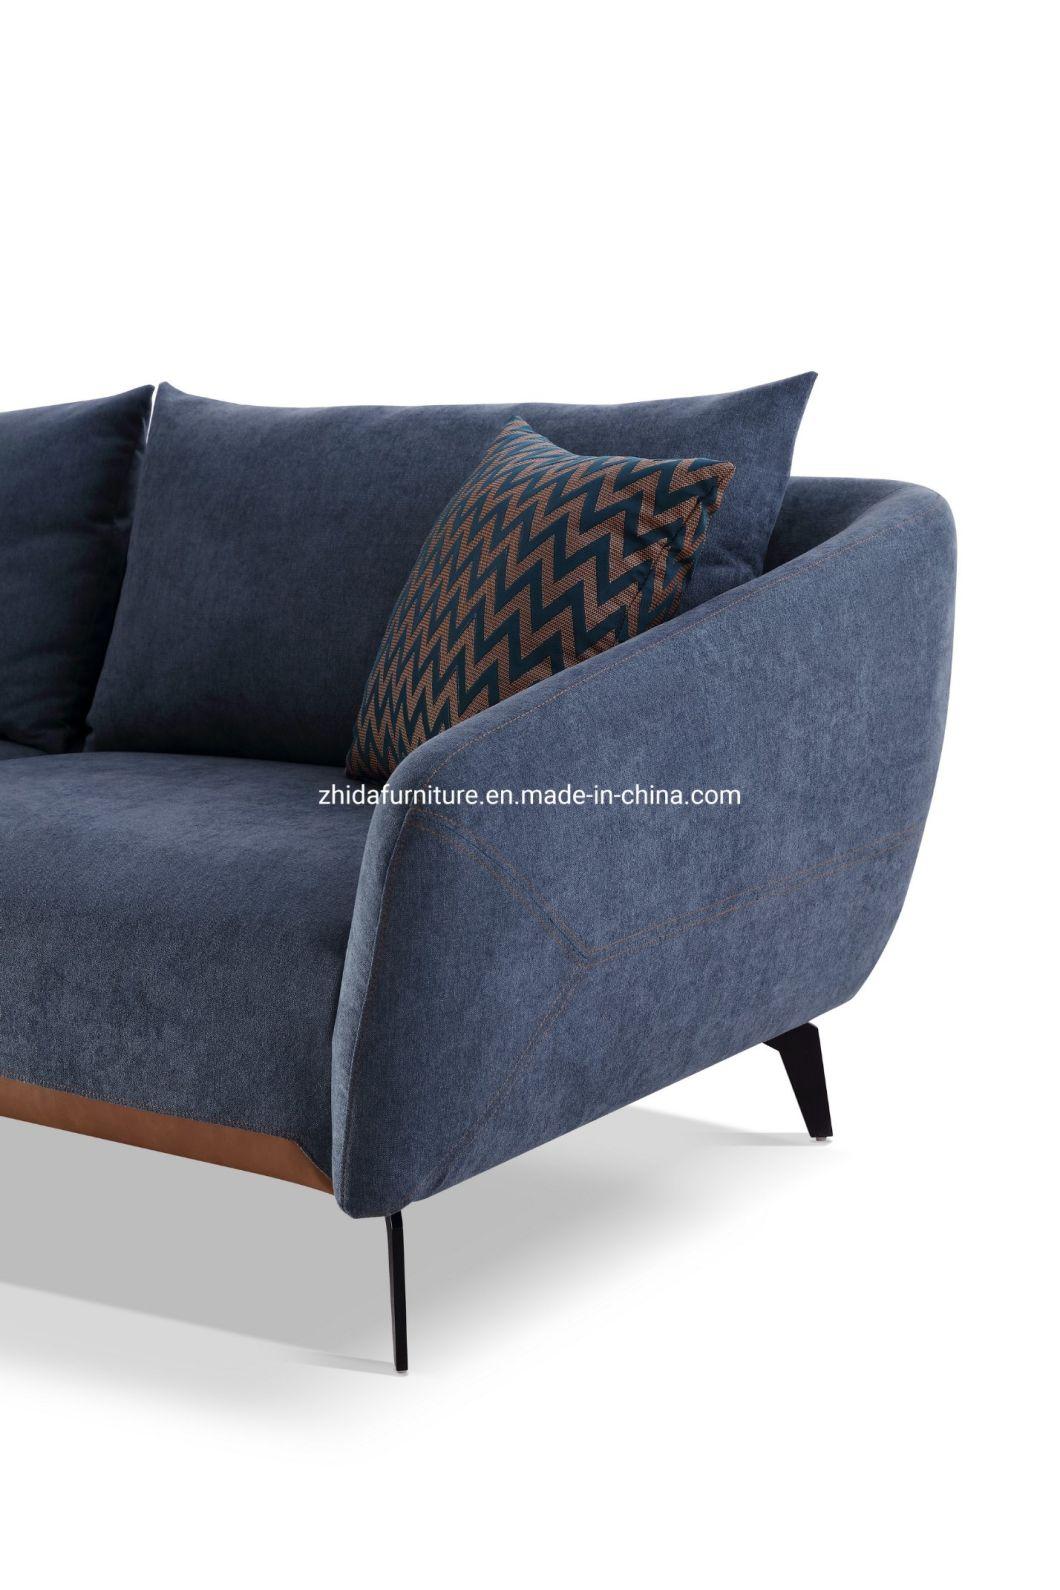 Fashion Fabric Home Furniture for Living Room Loveseat Sofa